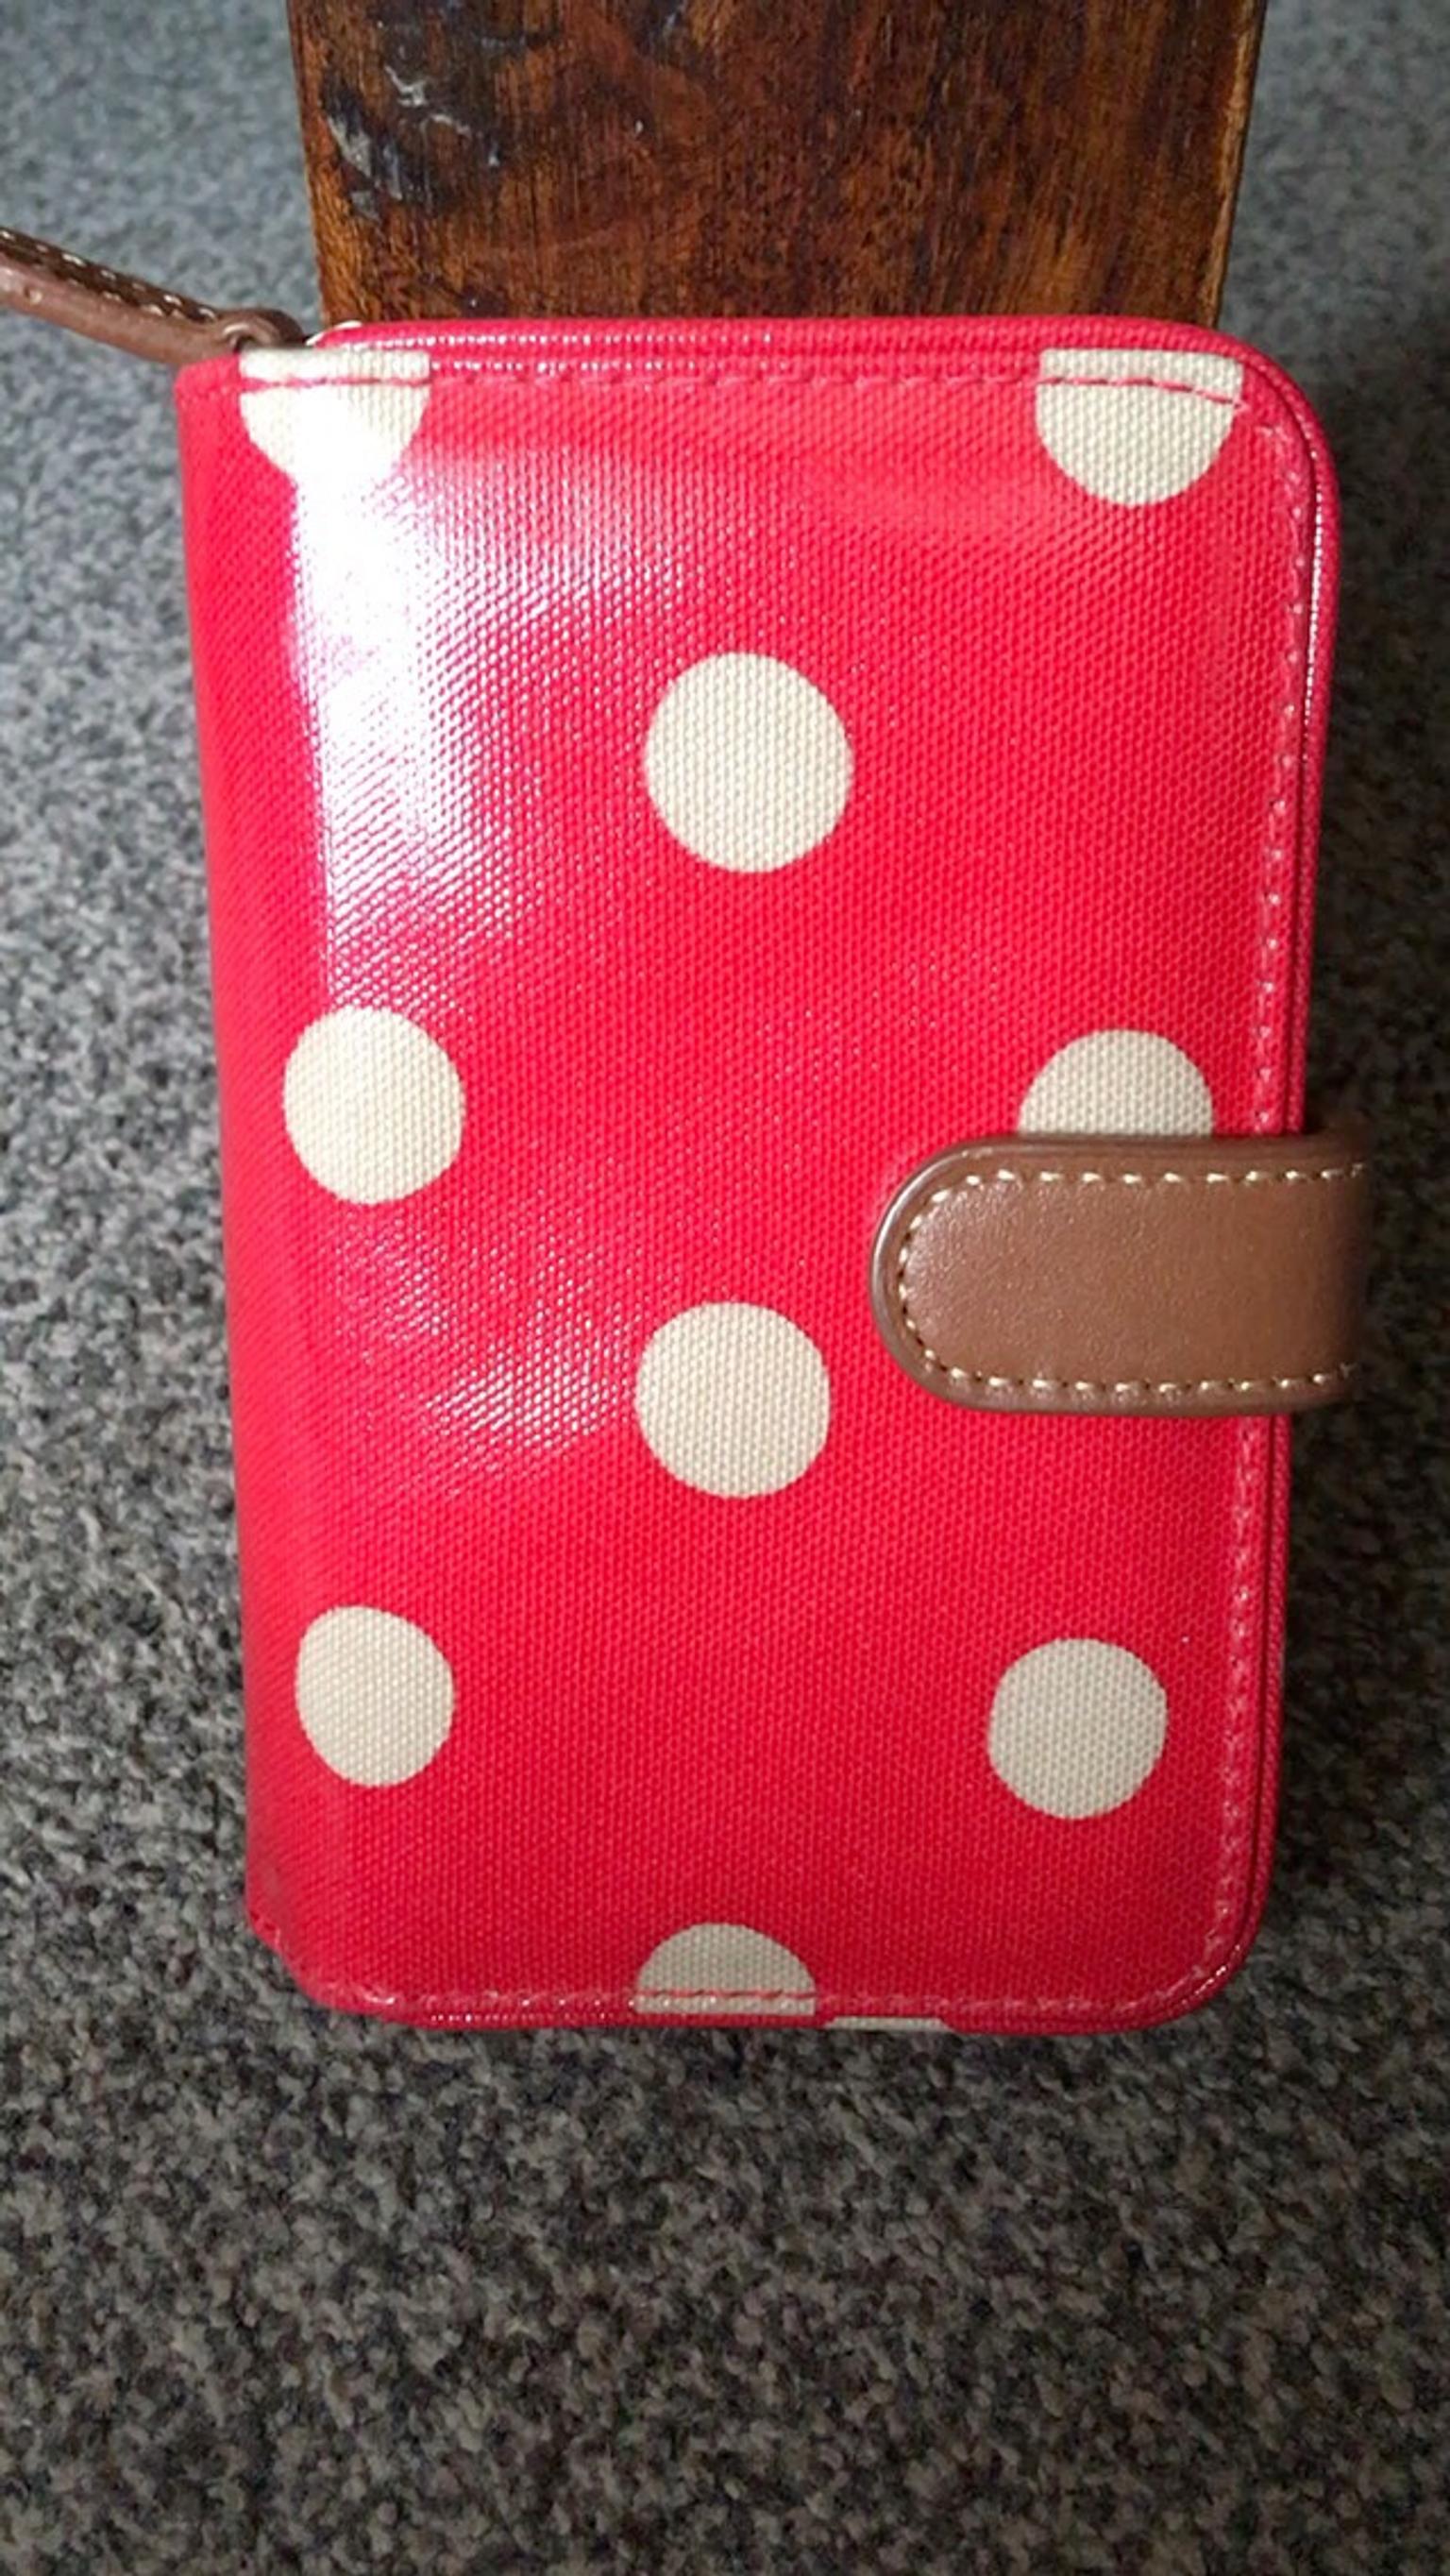 Cath Kidston red spot purse in LE3 